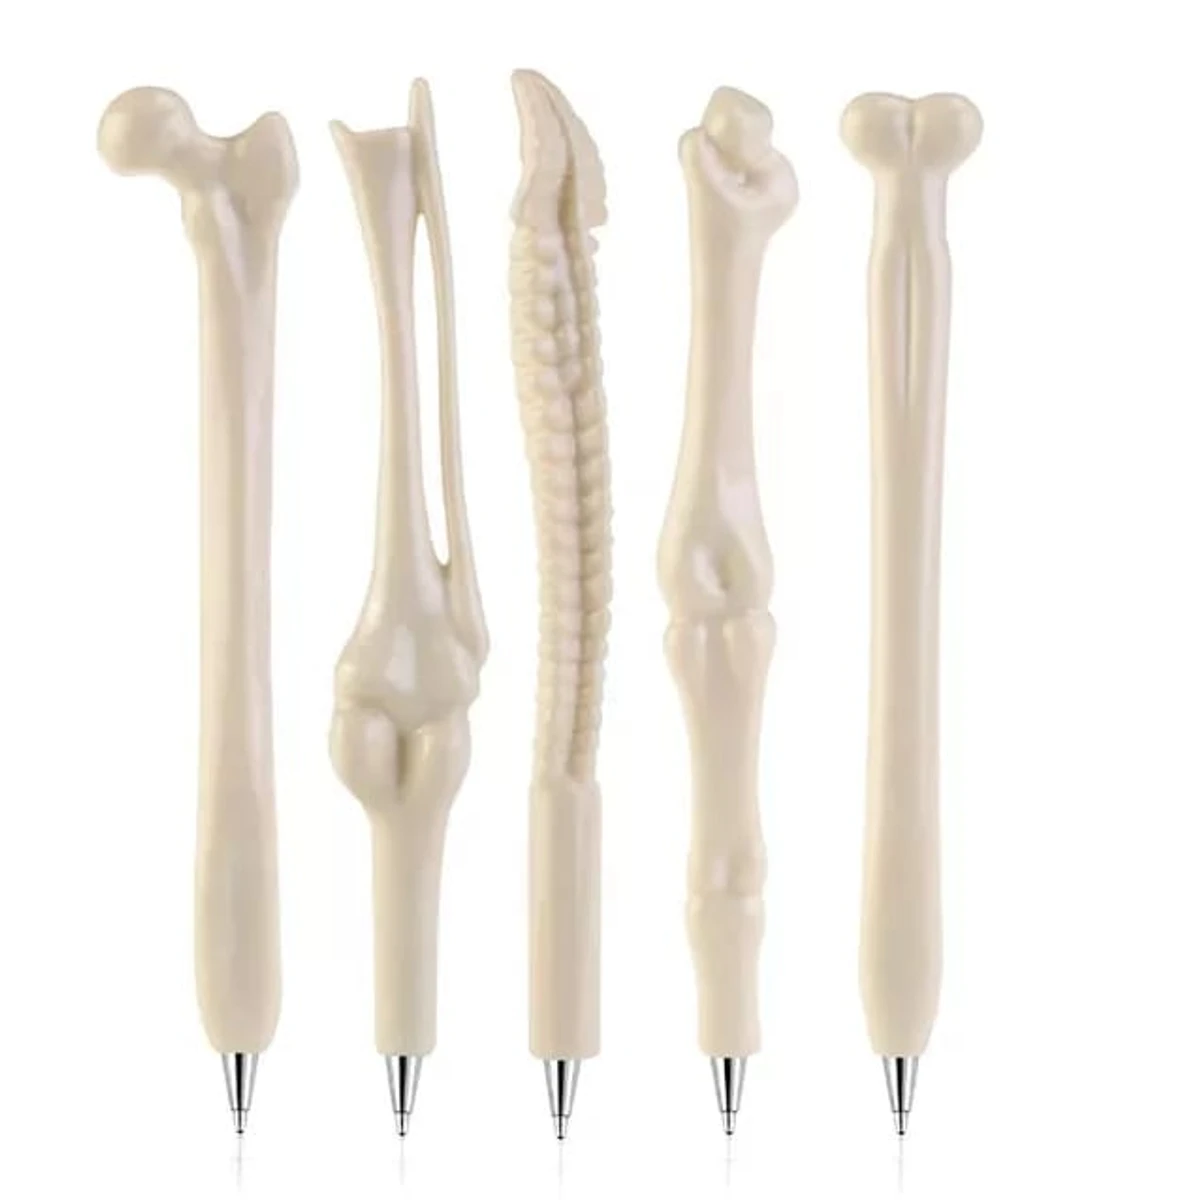 Skeleton Bone Pens Human Anatomy Inspired Dr.  Pens for Doctors Nurses Medical School Students - Assortment Pack